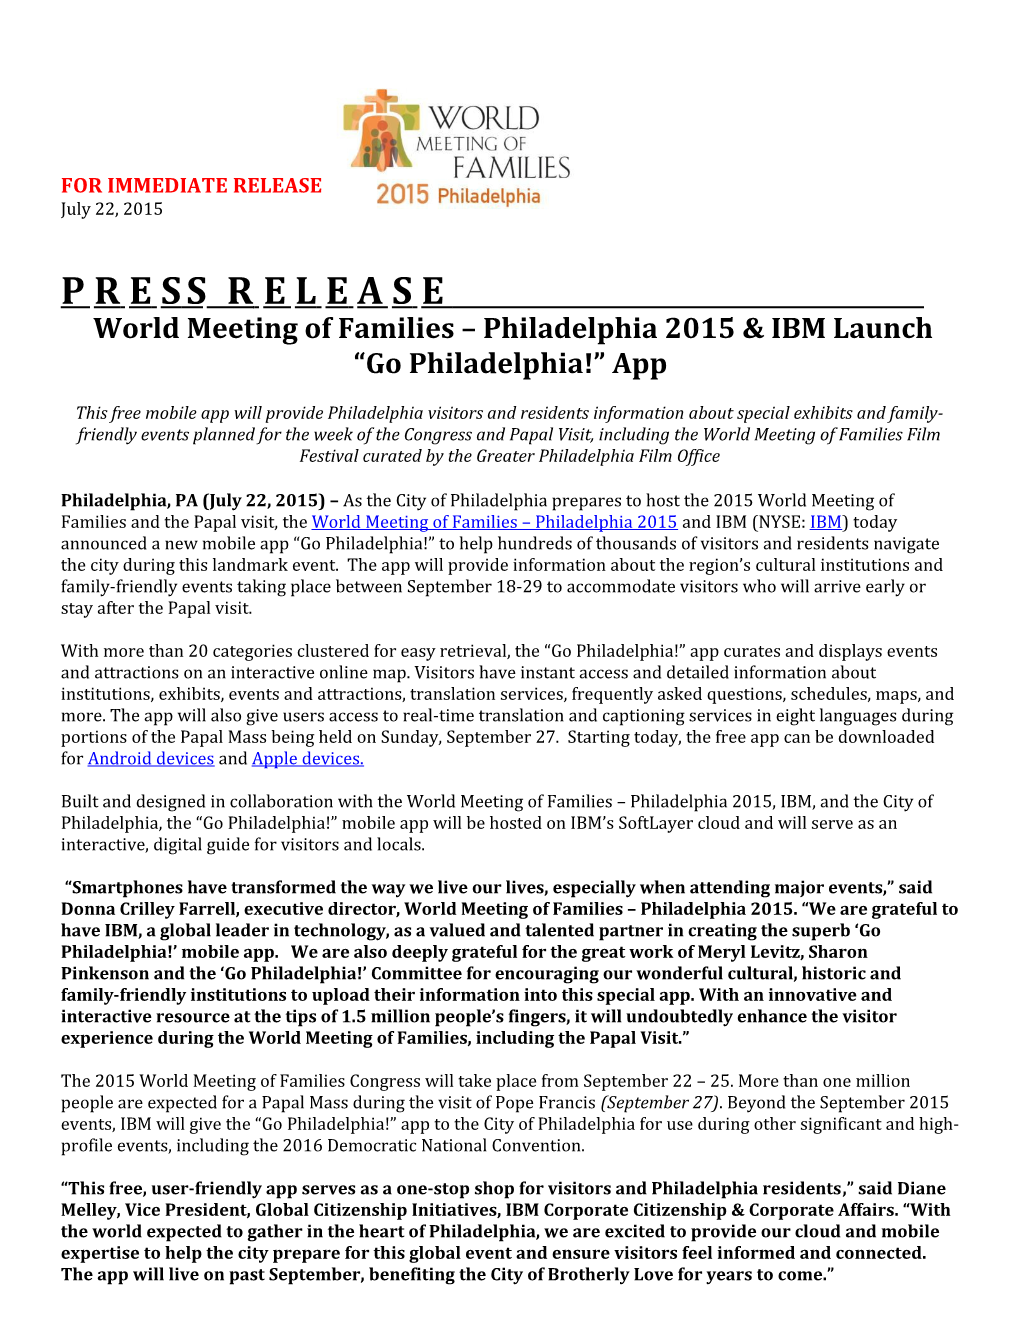 World Meeting of Families Philadelphia 2015 & IBM Launch Go Philadelphia! App